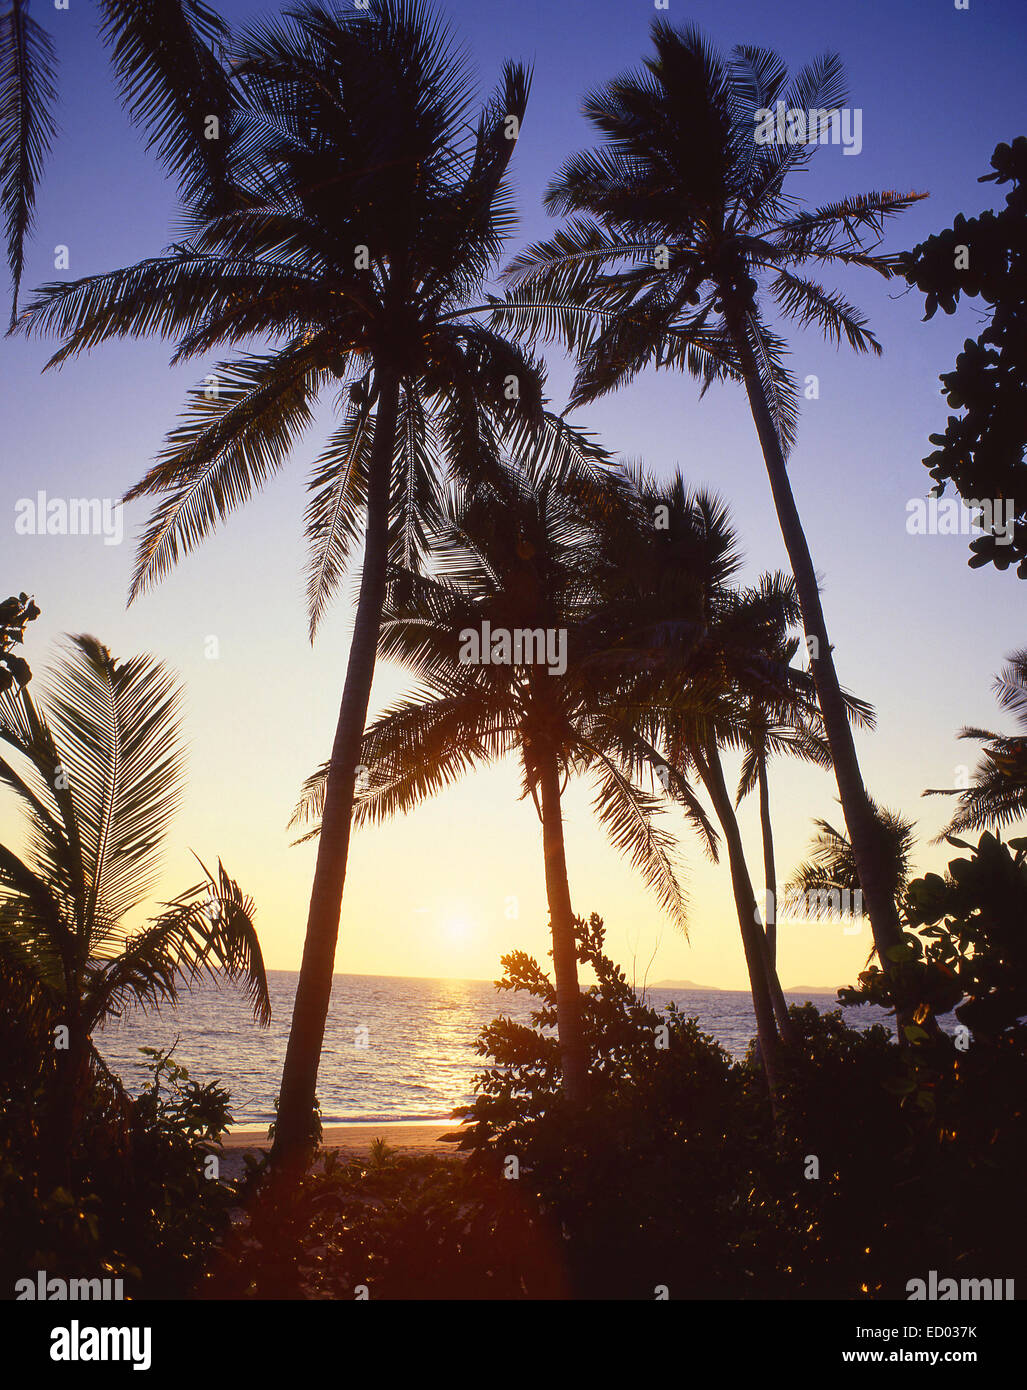 Tropischer Sonnenuntergang, Beachcomber Island Resort, Beachcomber Island, Mamanuca Inseln, Viti Levu, Republik Fidschi-Inseln Stockfoto